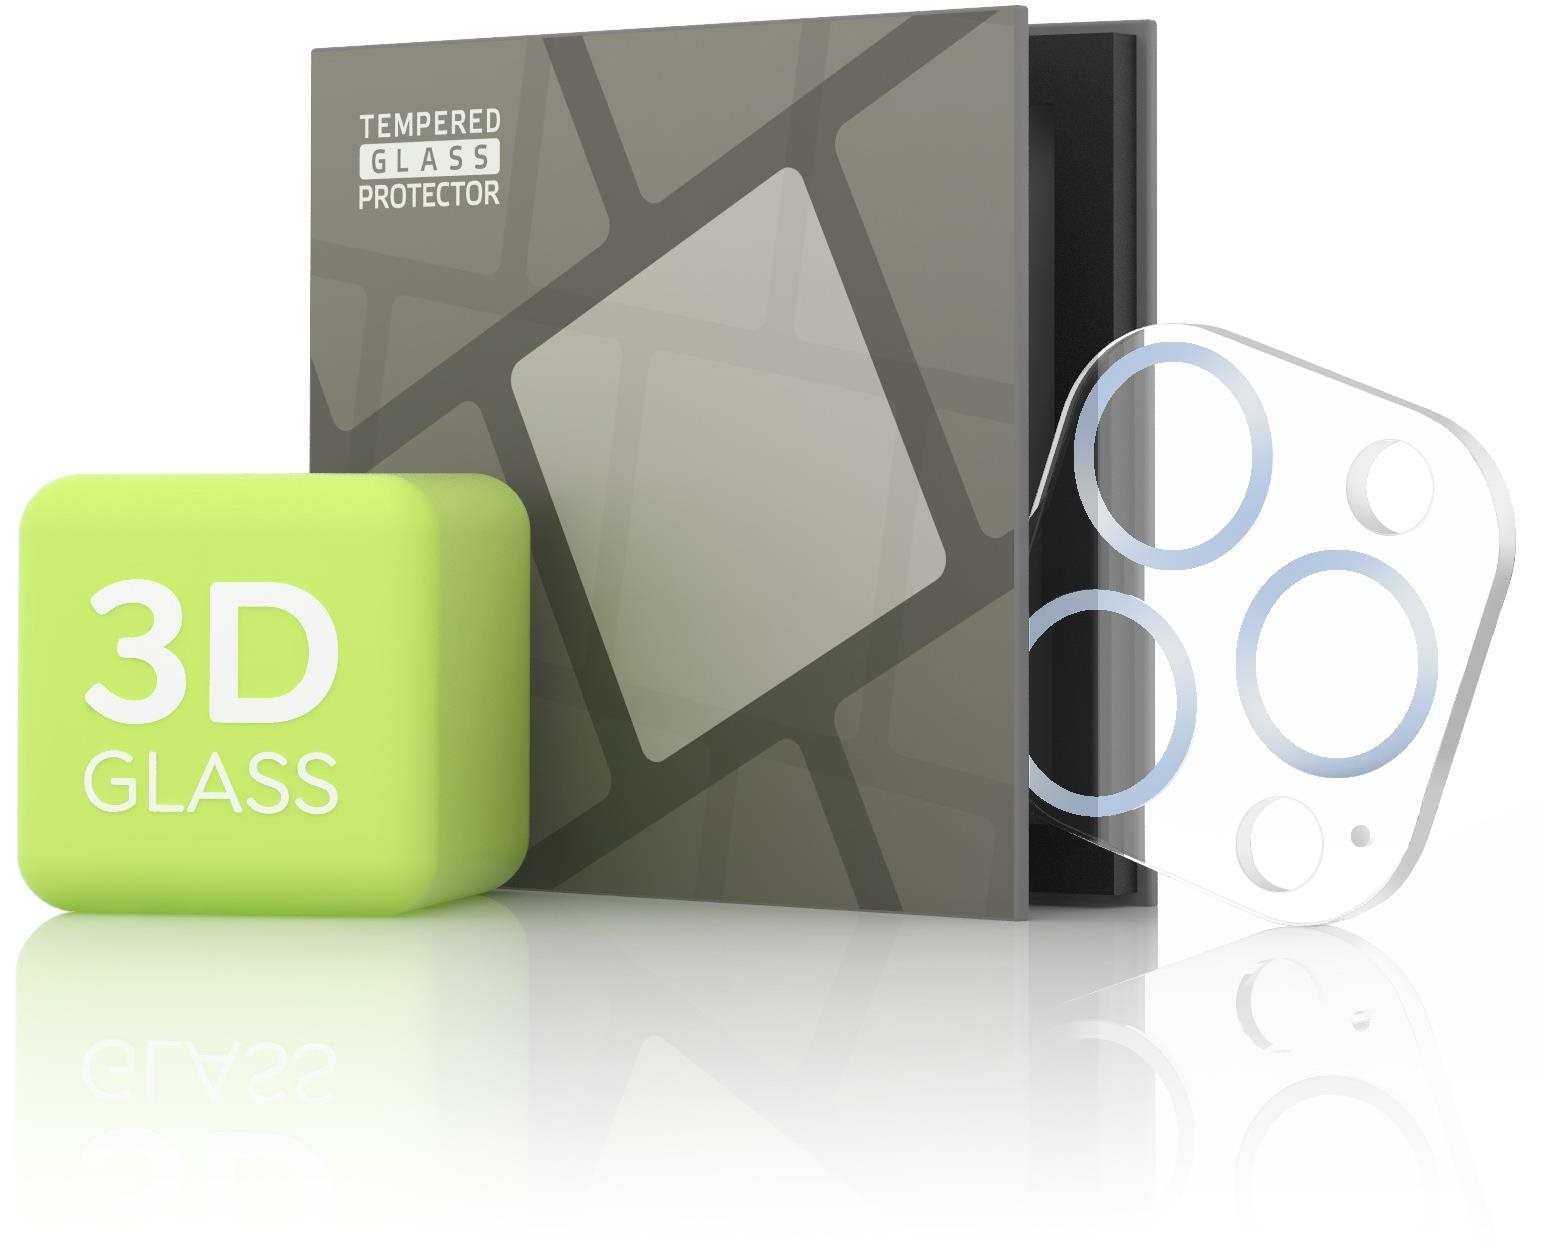 Kamera védő fólia Tempered Glass Protector iPhone 13 Pro Max / 13 Pro kamerához - 3D Glass